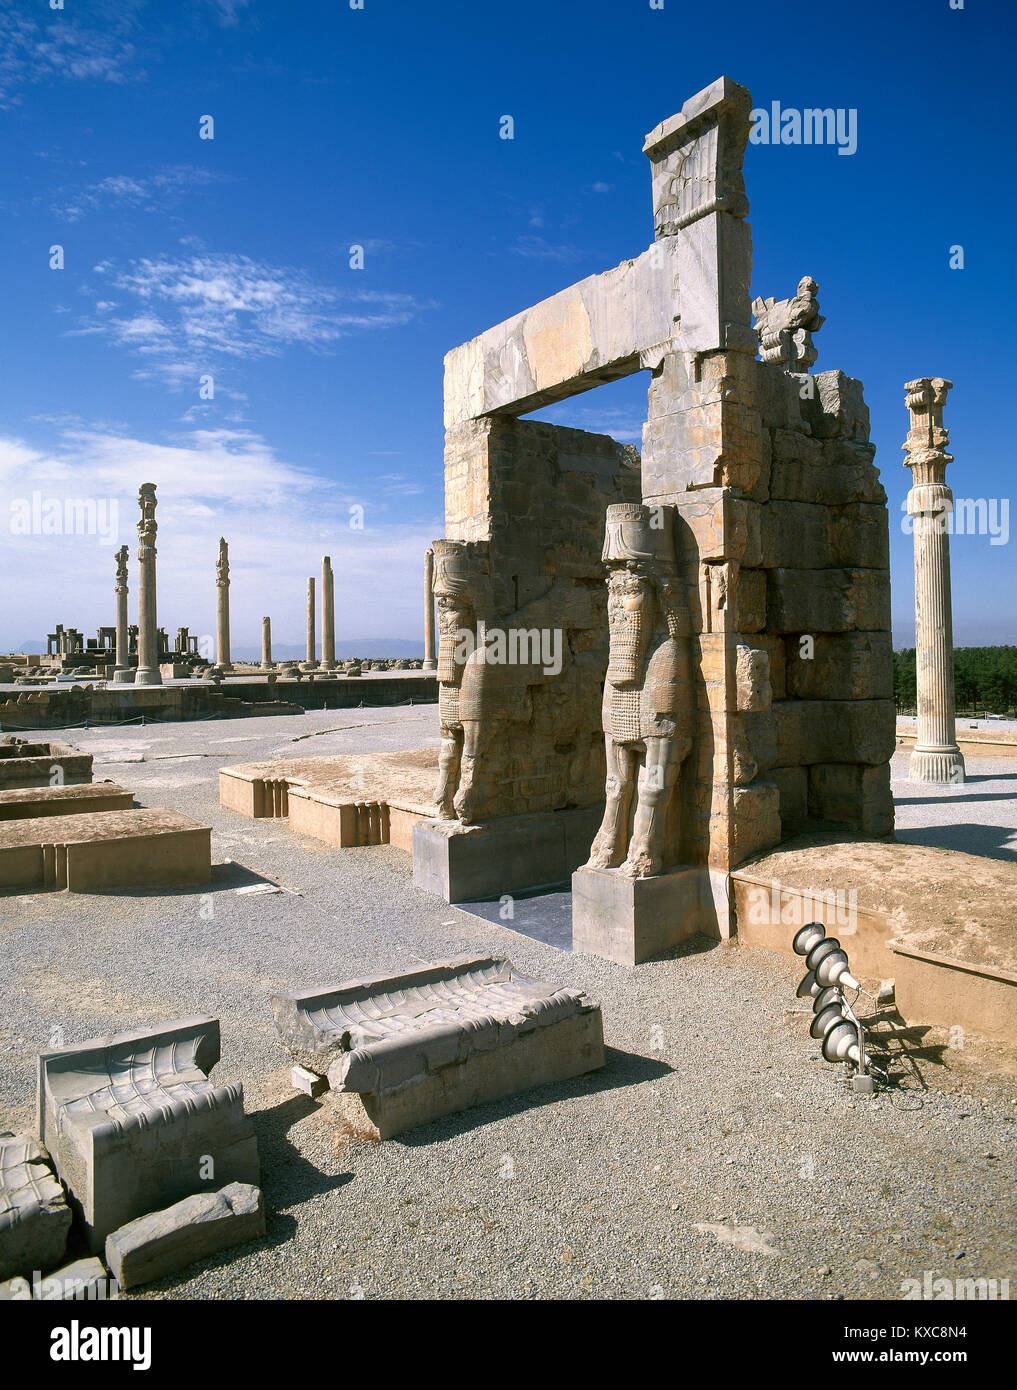 Porte de toutes les nations. Persepolis, Iran. L'Empire achéménide (ca. 550-330 avant J.-C.). Banque D'Images